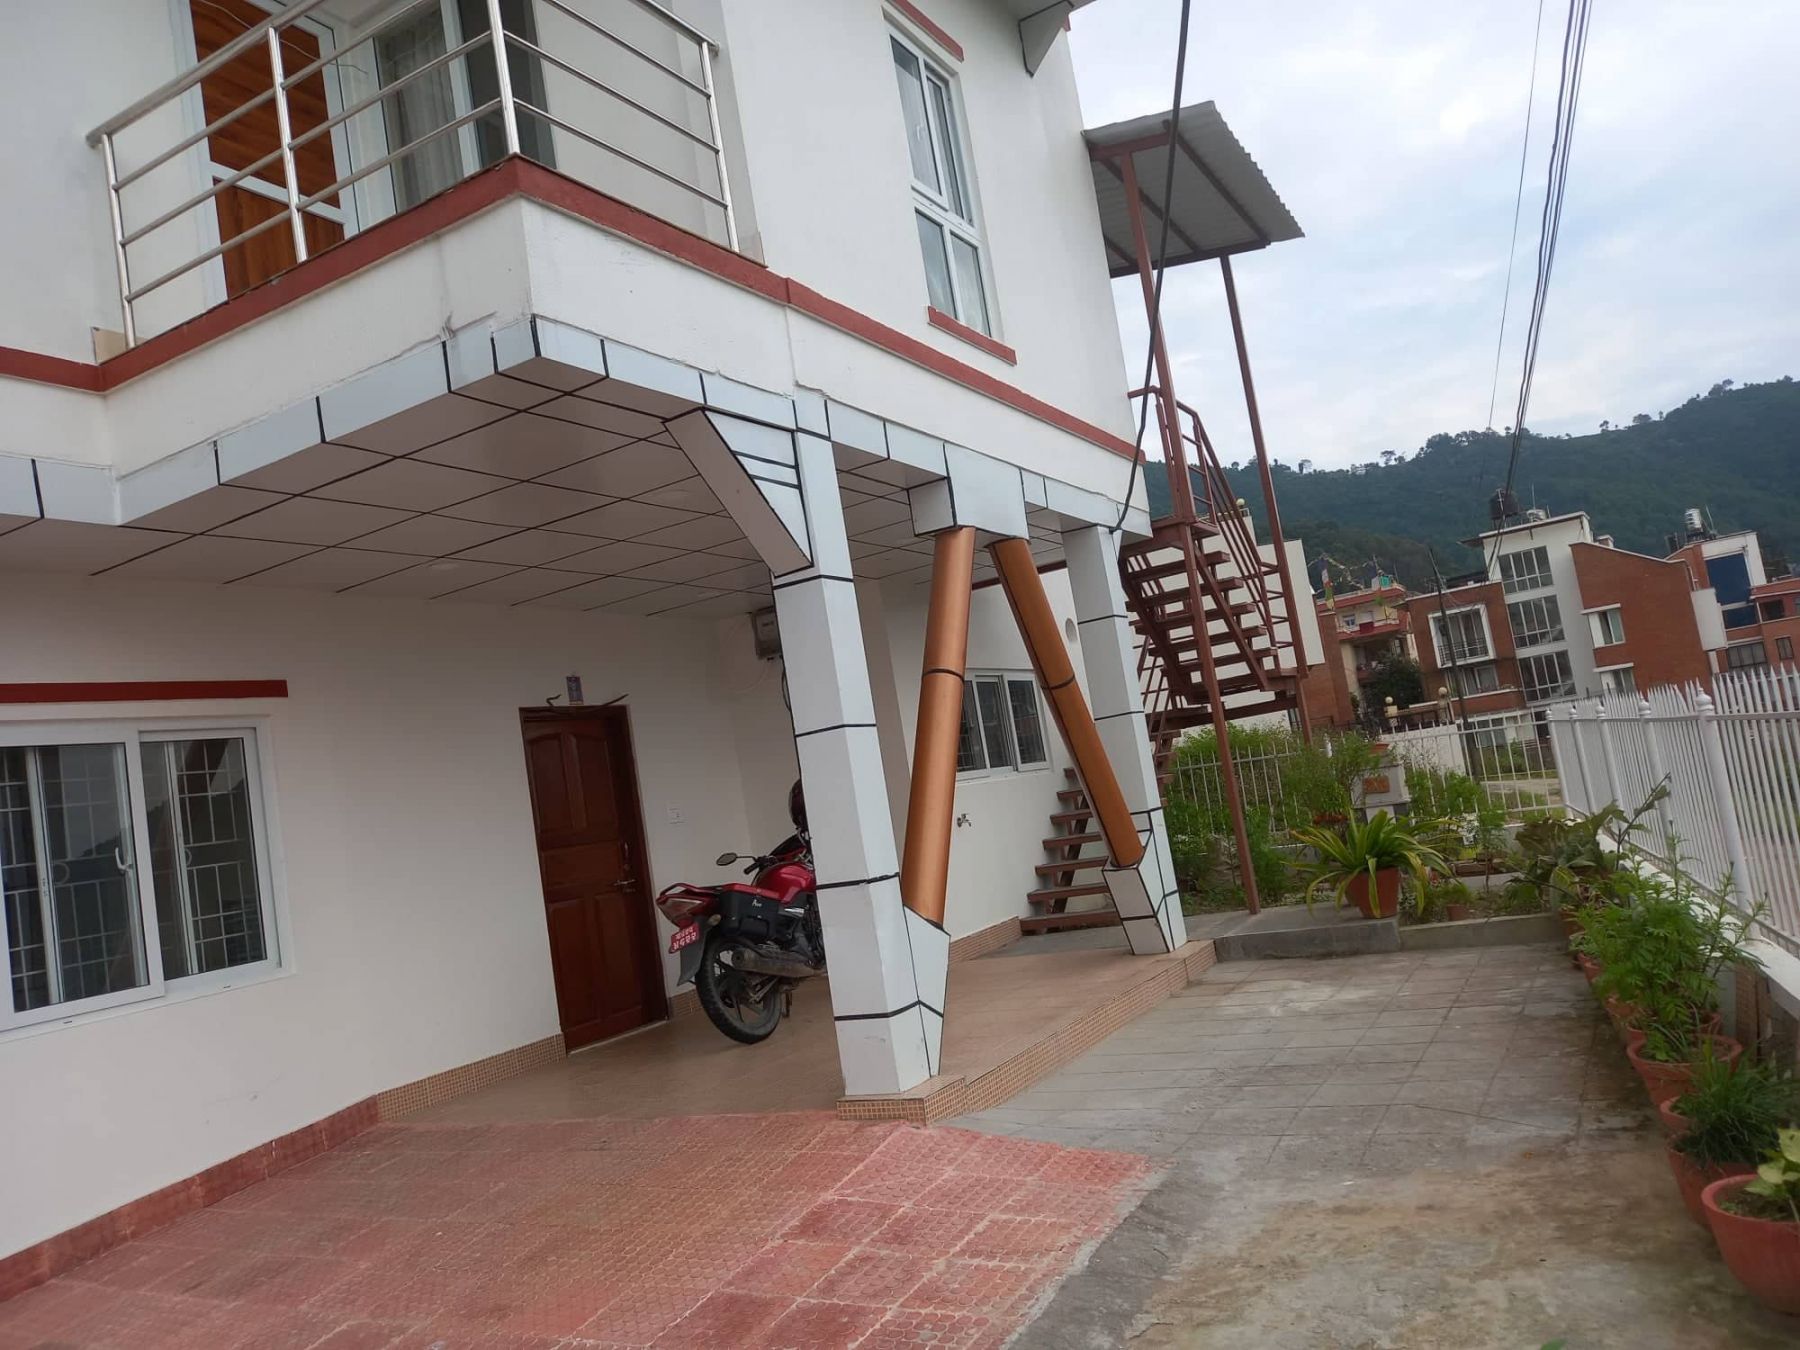 3 BHK flat in Budhanilakantha-1, Taulung Chautari Marg near Buddha Laxmi Mandir